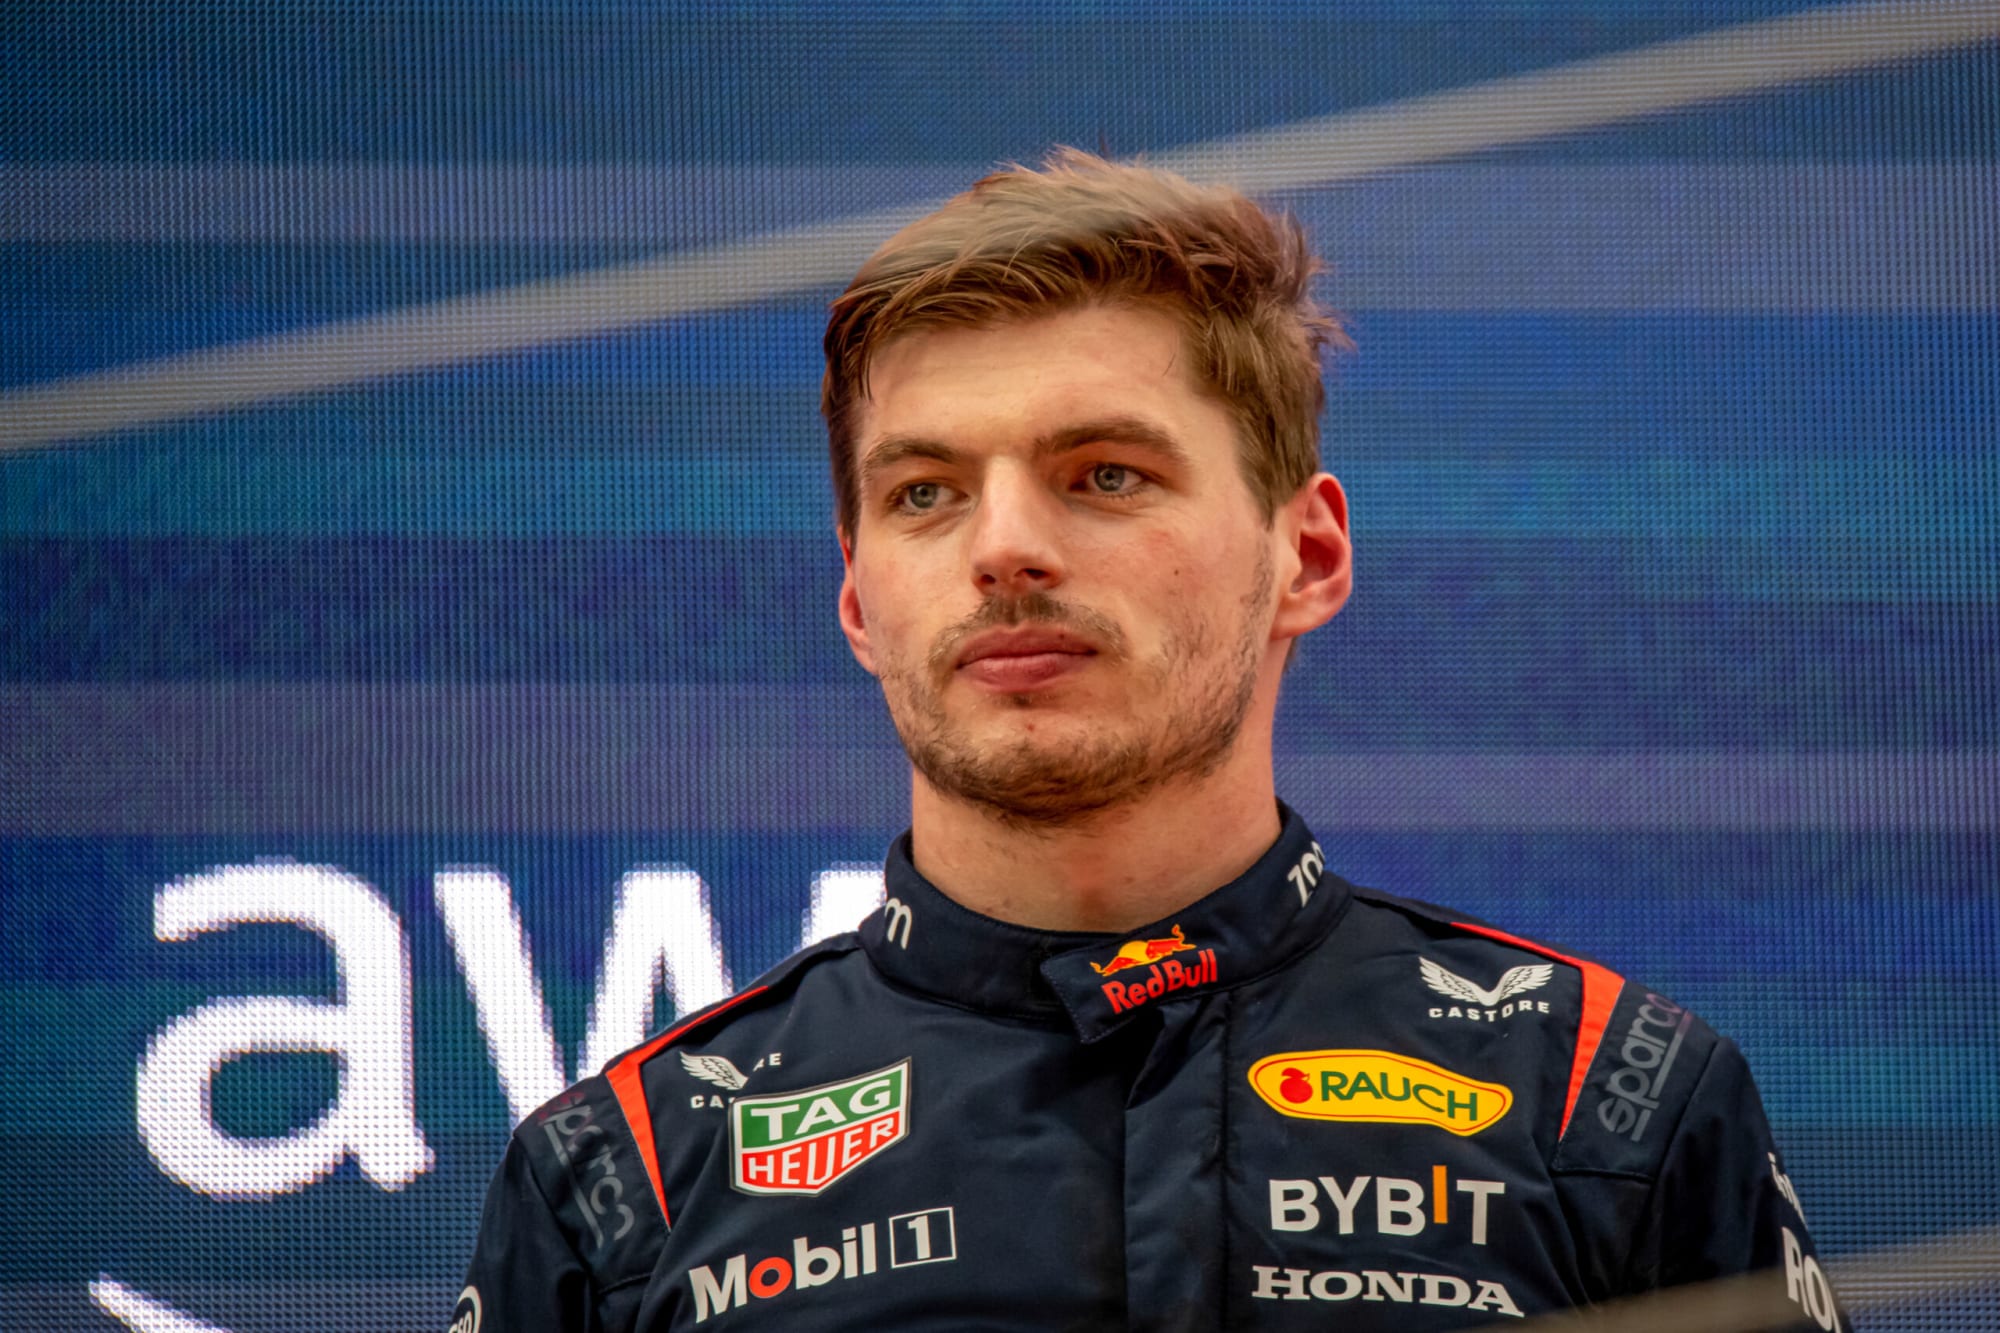 Formula 1: Betting on Max Verstappen just became foolish